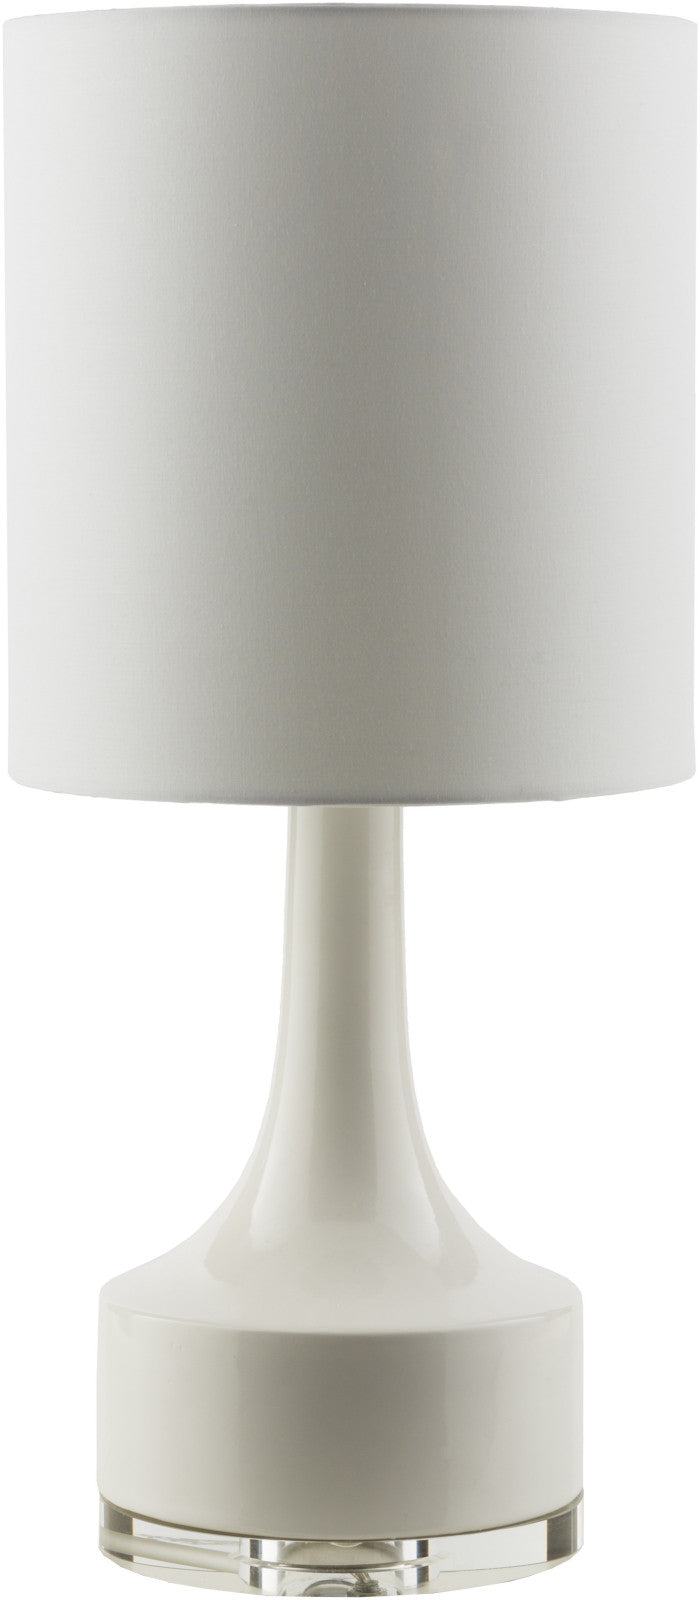 Surya Farris FRR-356 White Lamp Table Lamp